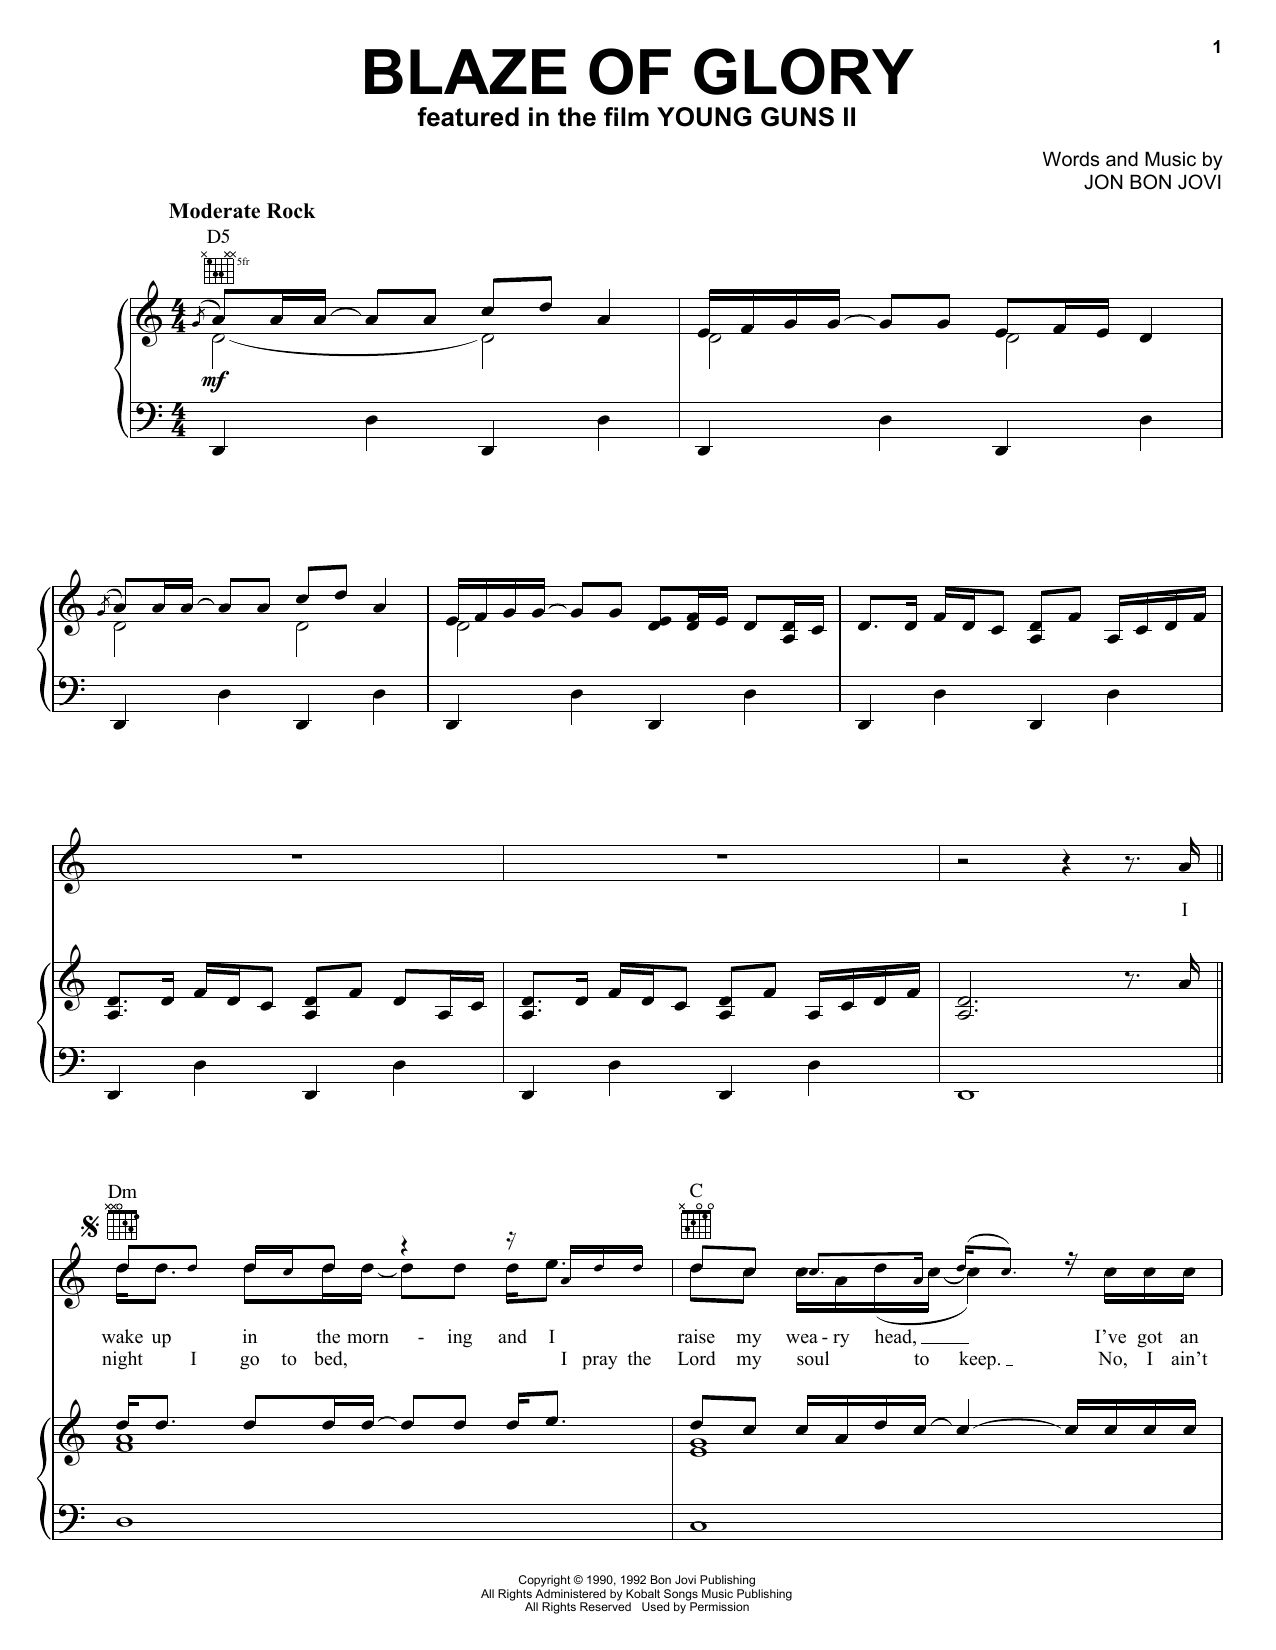 Jon Bon Jovi Blaze Of Glory Sheet Music Notes & Chords for Trombone - Download or Print PDF